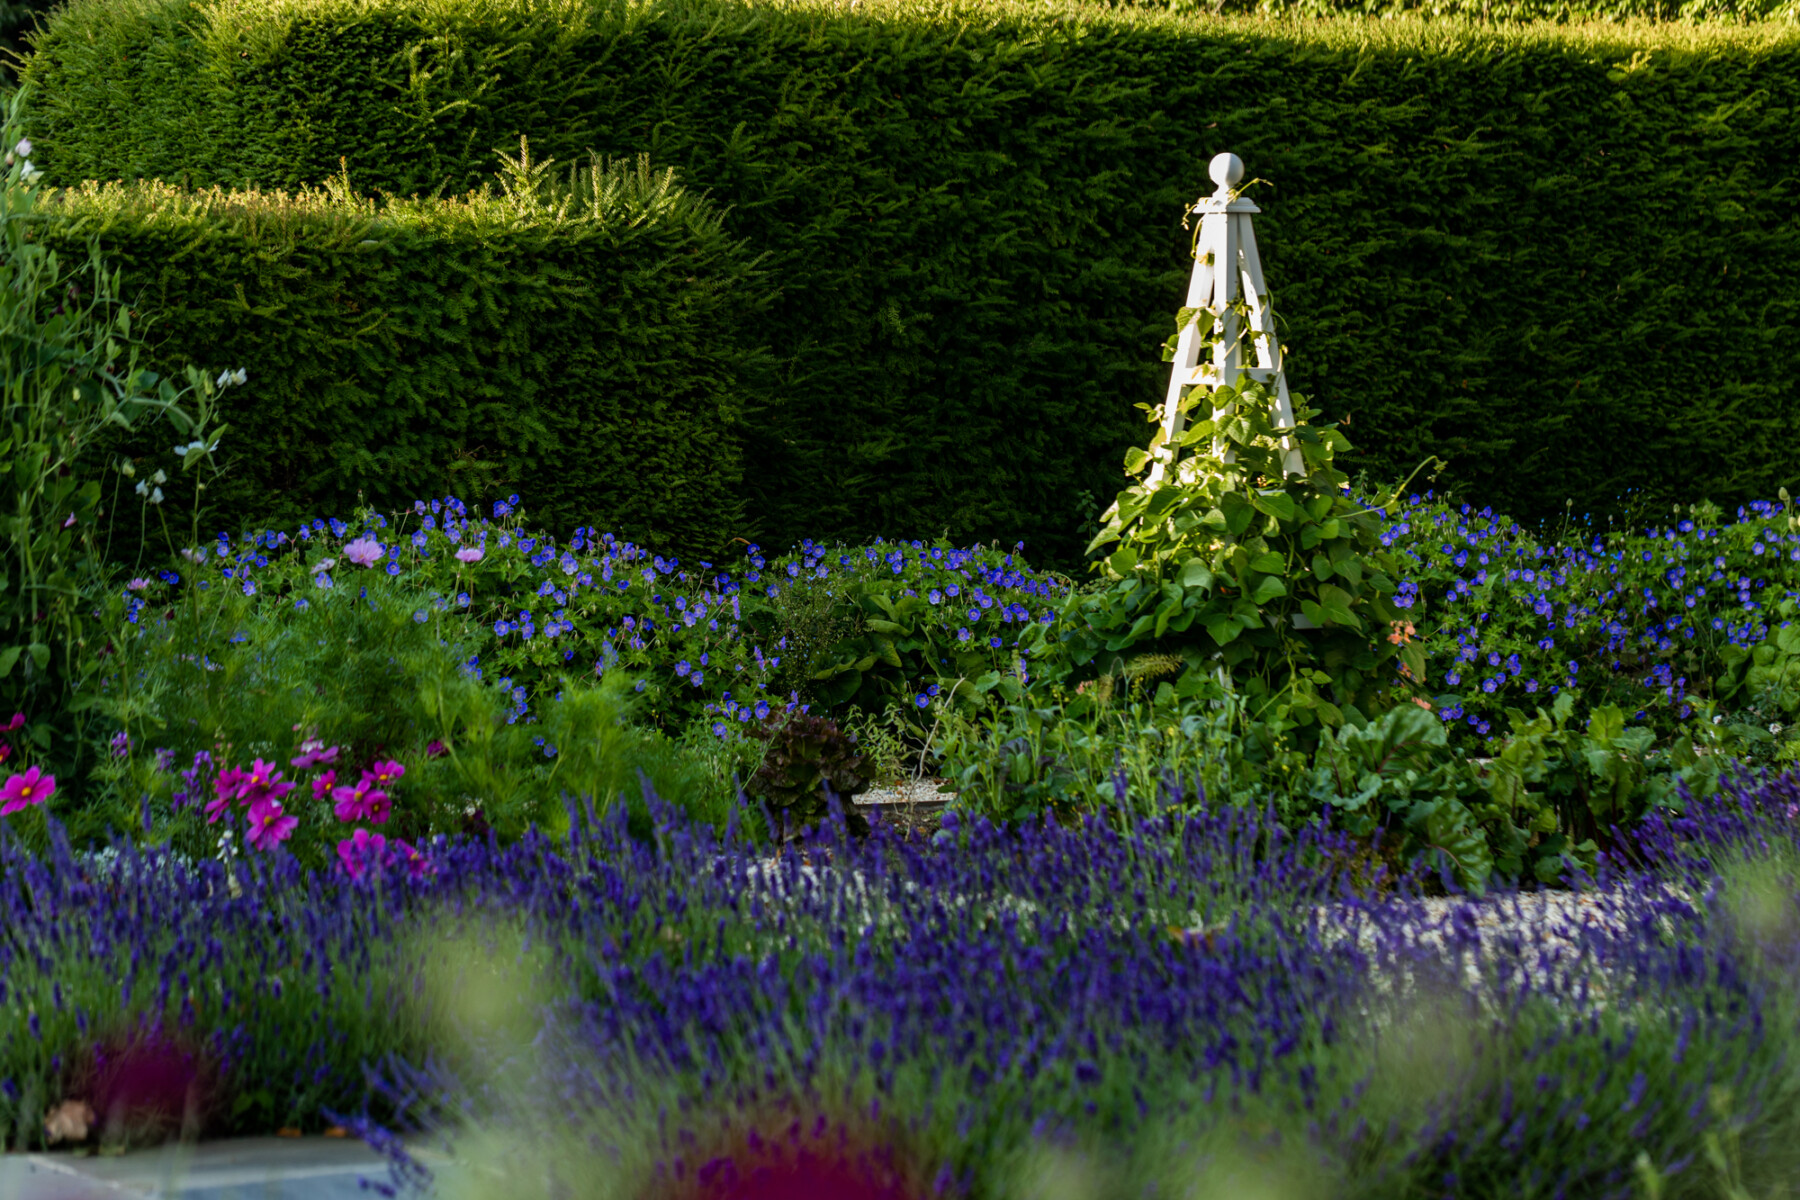 Nicholsons Lockhart Garratt Garden Design - A Celebration of Nature